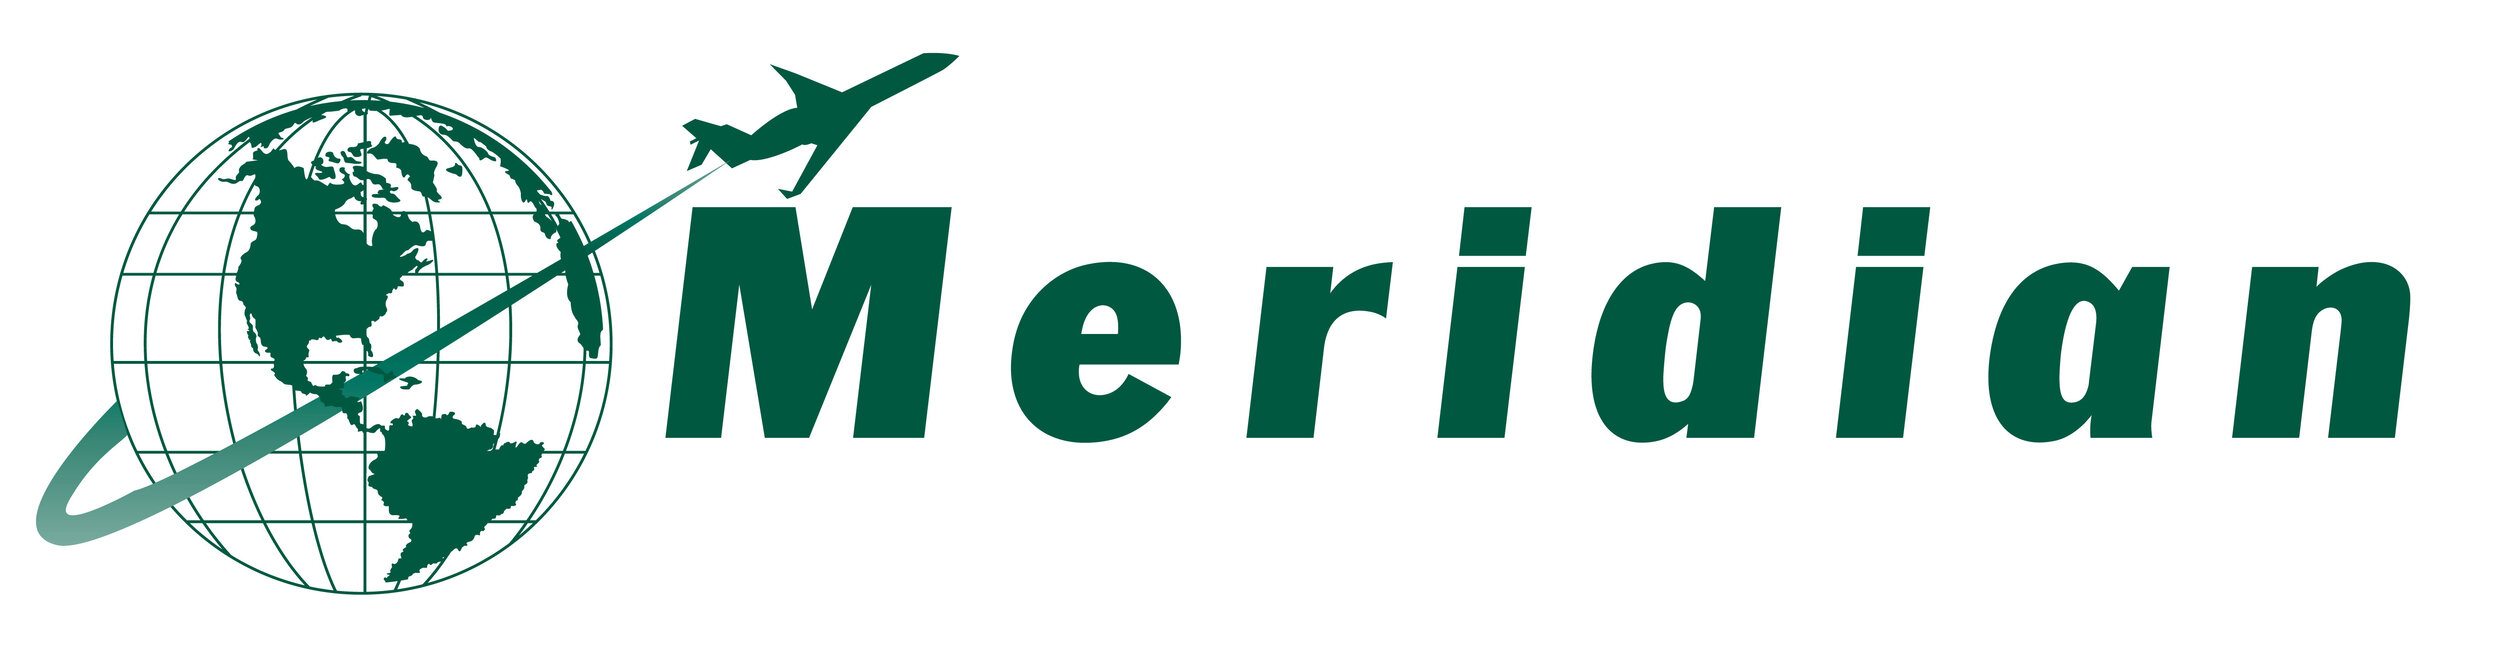 meridian_logo_2.jpg